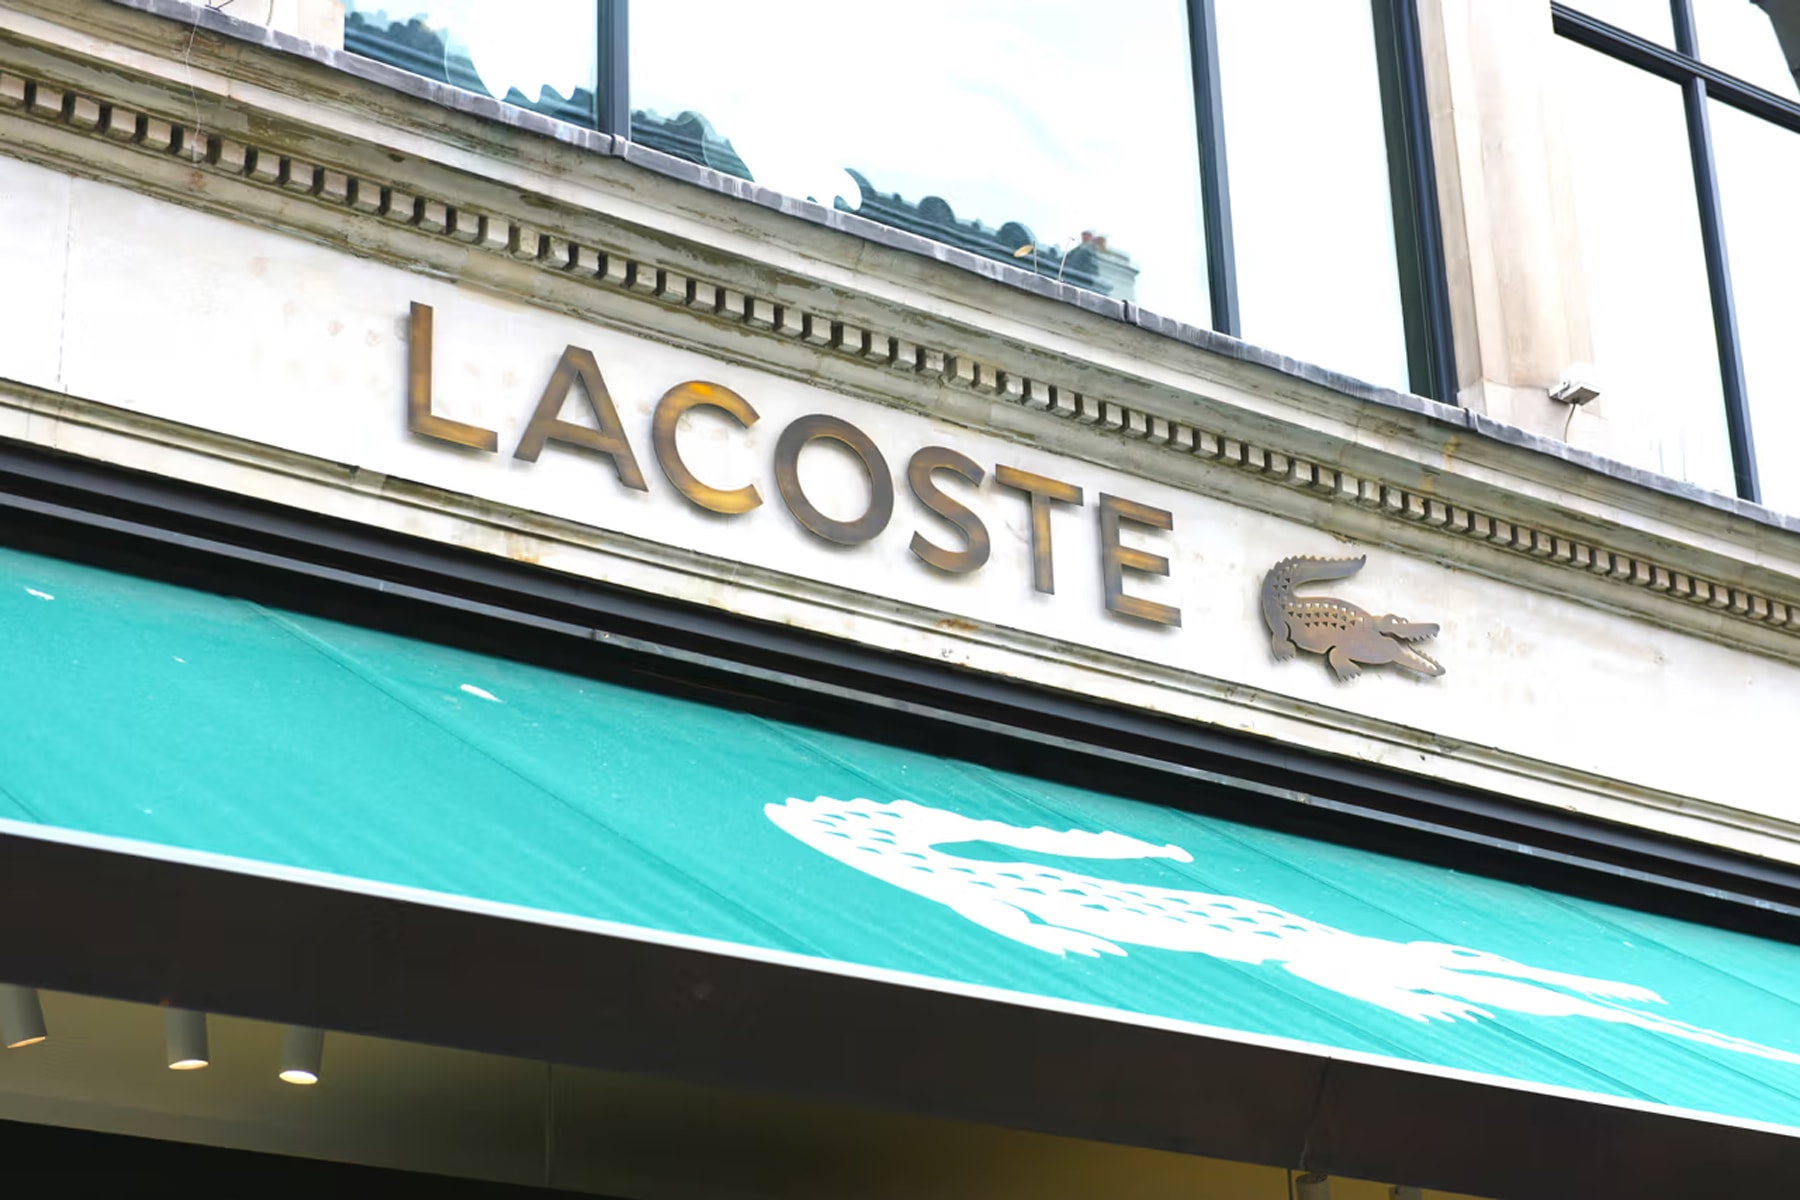 Lacoste 在中國贏得鱷魚商標訴訟